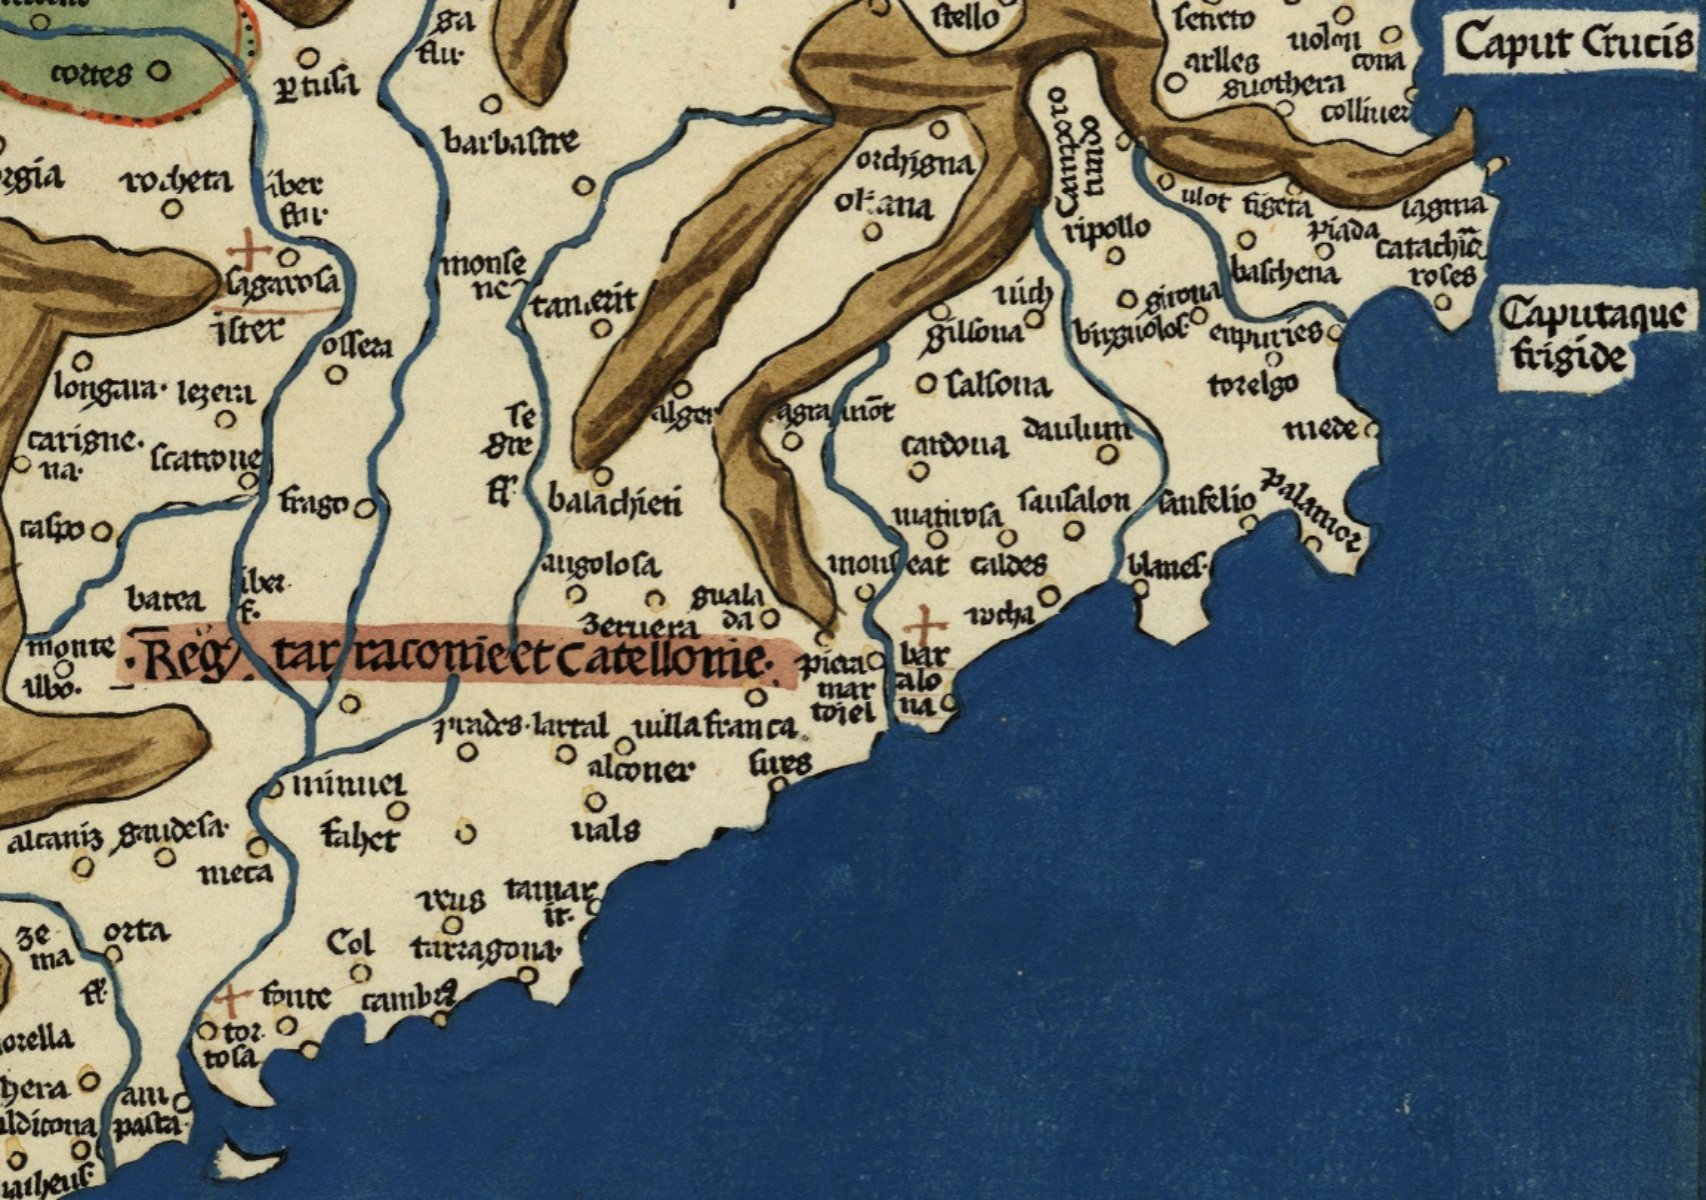 On era la línia de la costa a la Catalunya medieval?